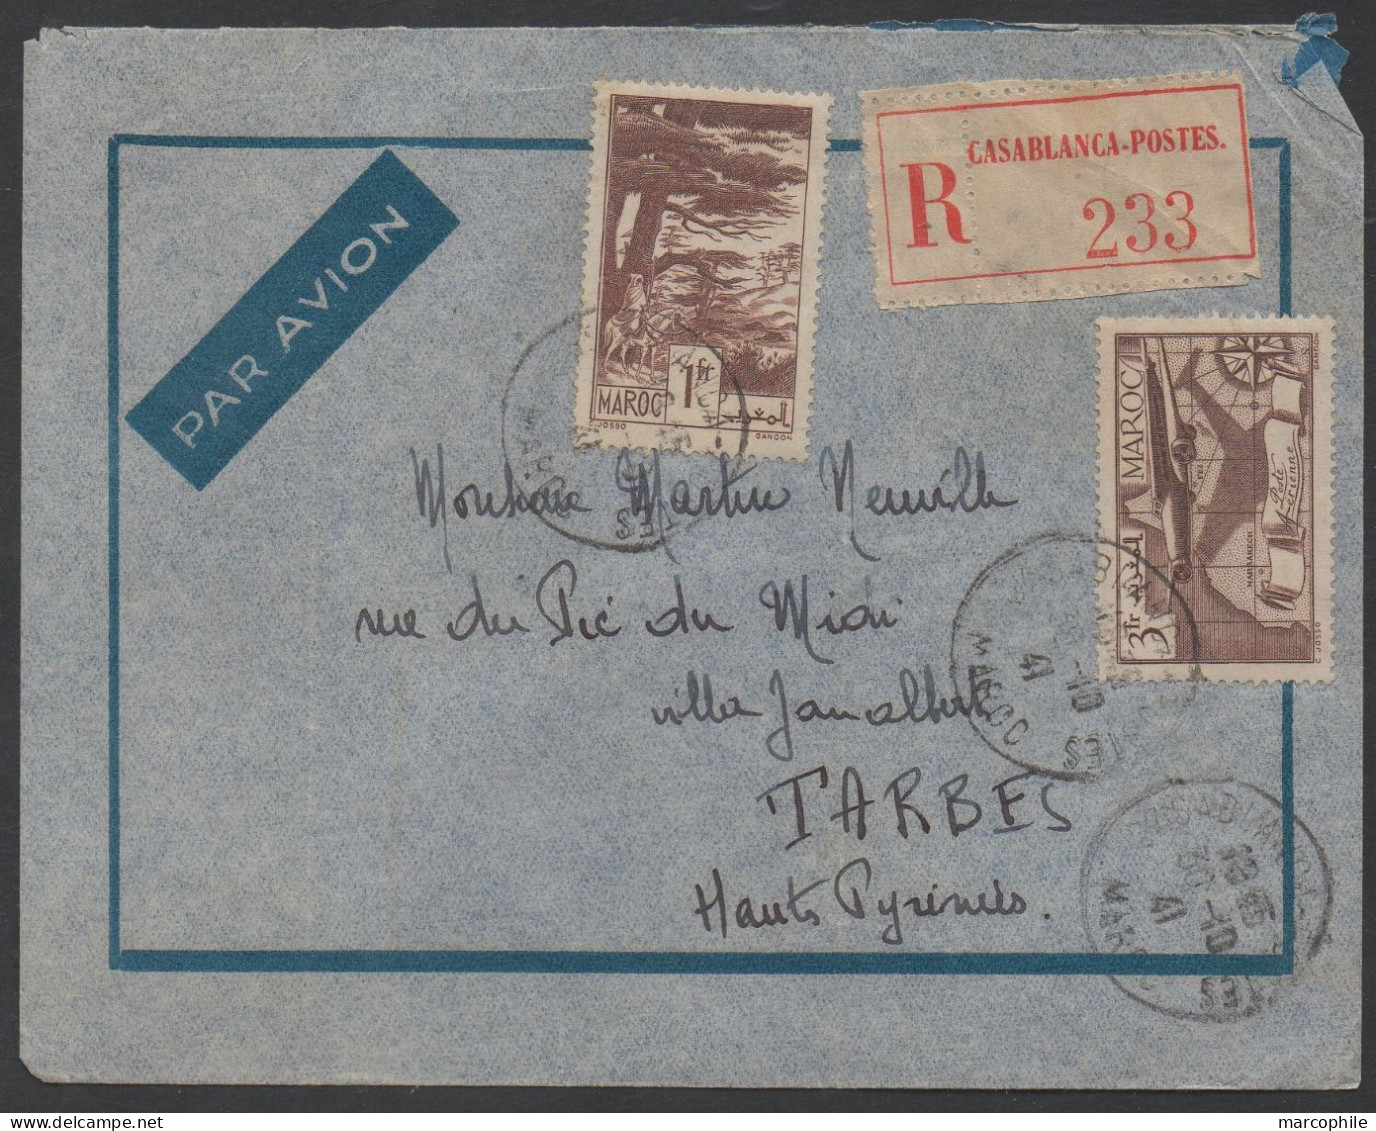 MAROC - CASABLANCA / 1941 LETTRE AVION ==> TARBES (ref 8947) - Covers & Documents